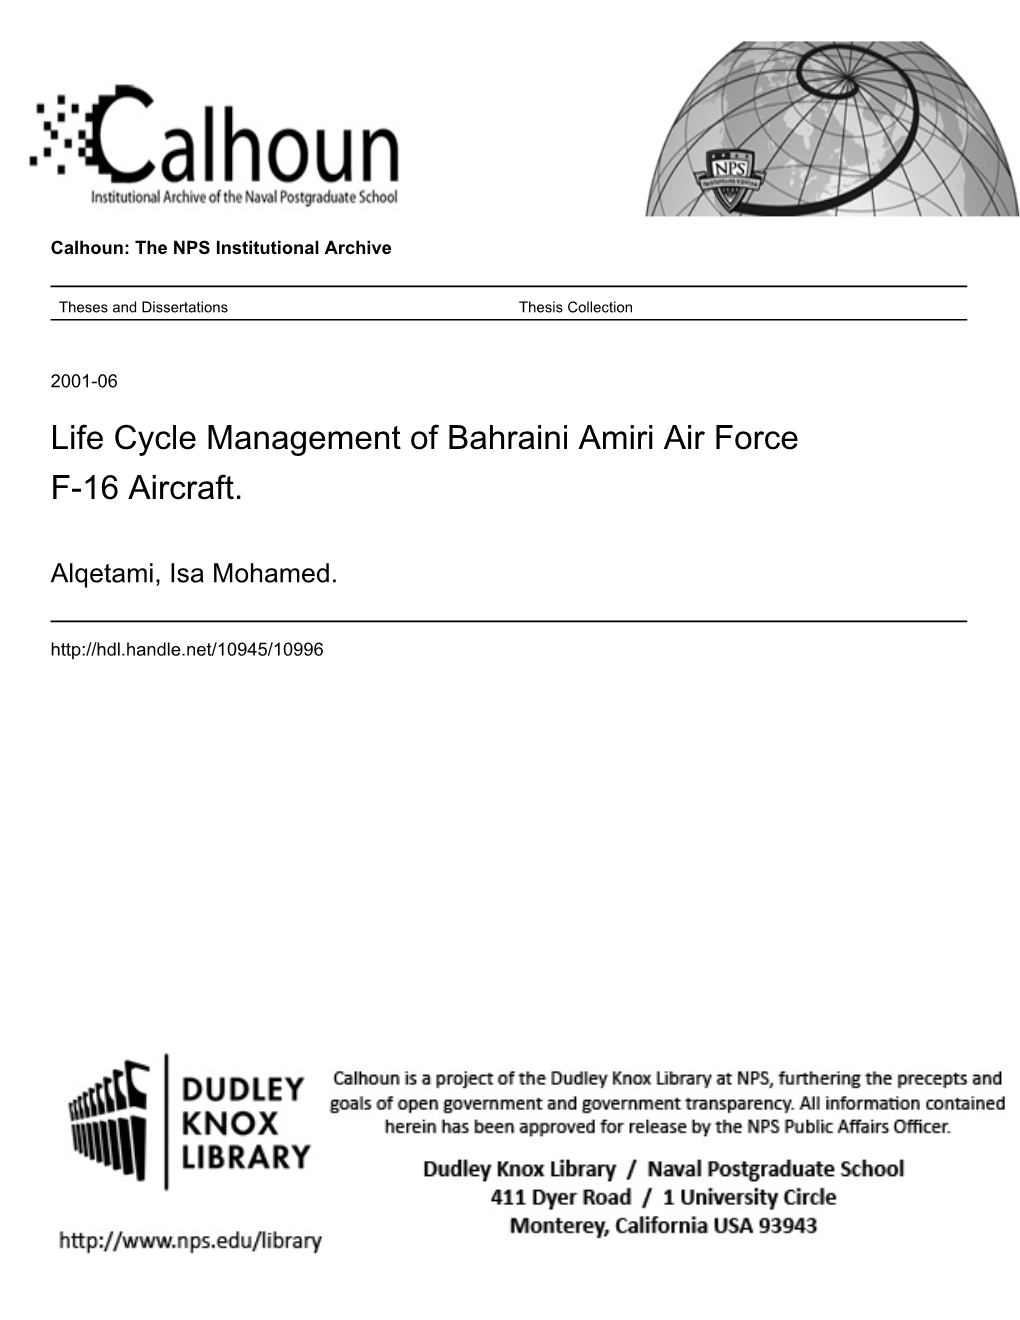 Life Cycle Management of Bahraini Amiri Air Force F-16 Aircraft